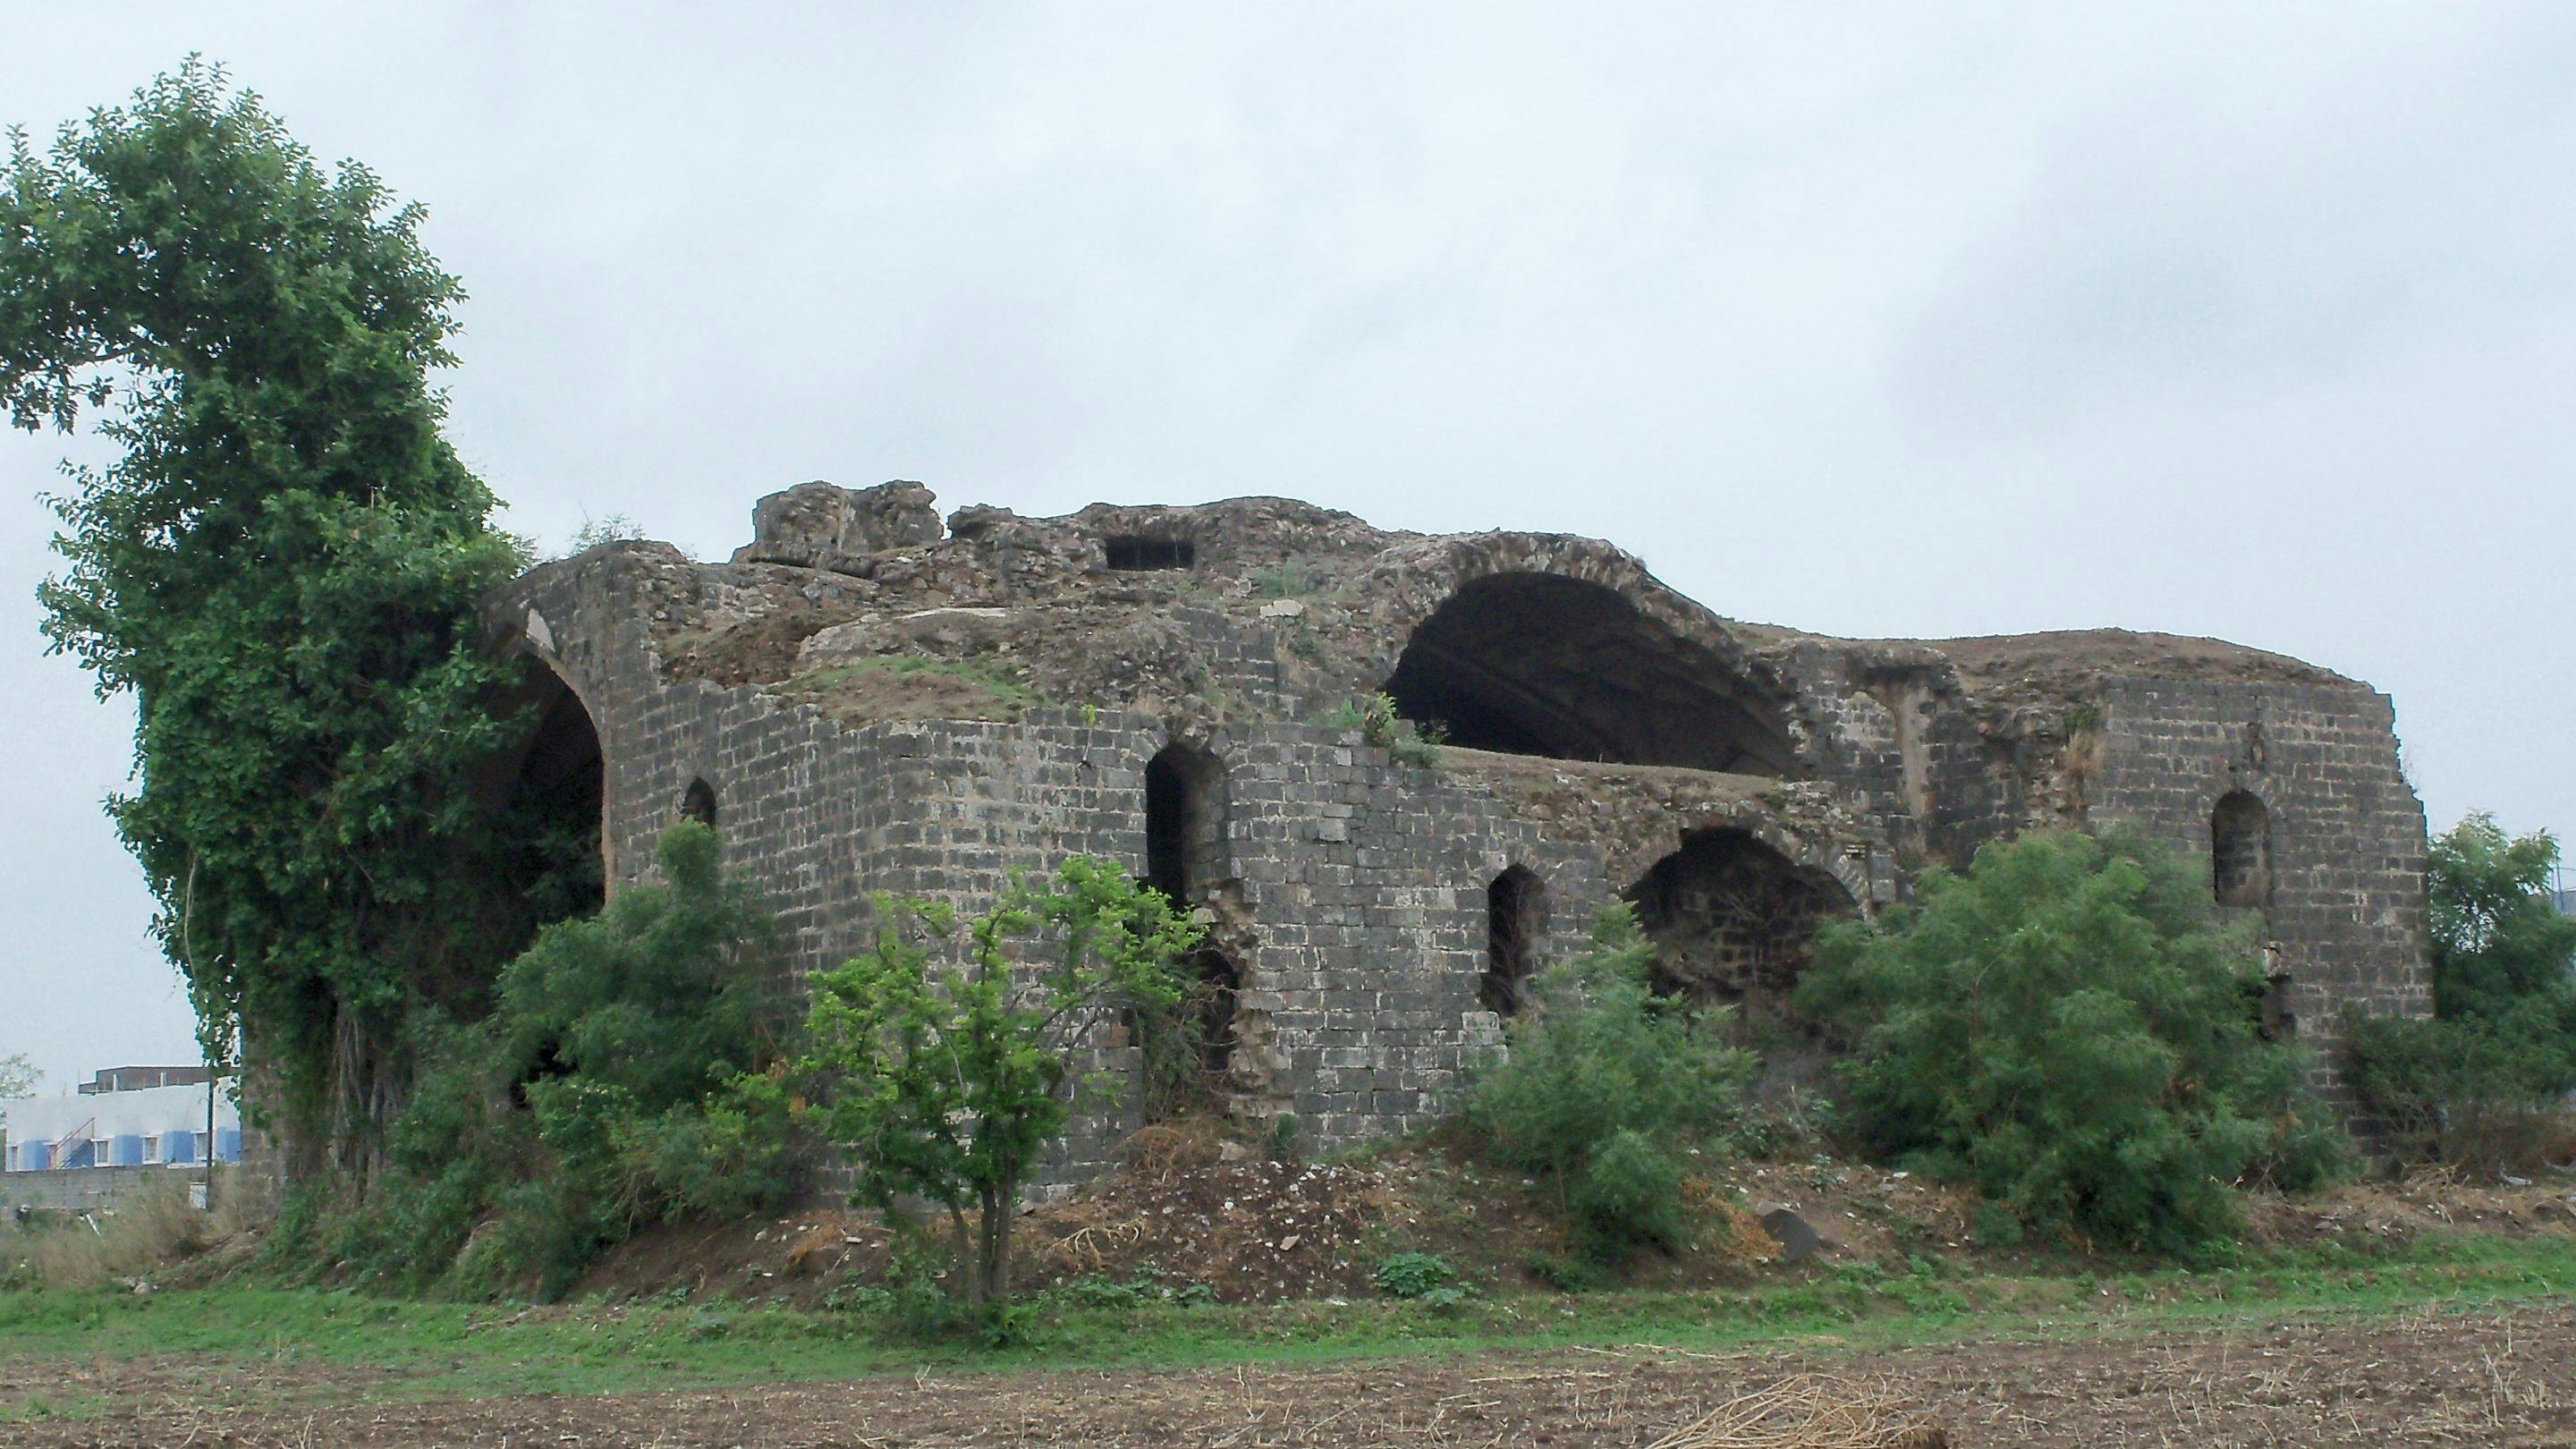 Lakkad Mahal